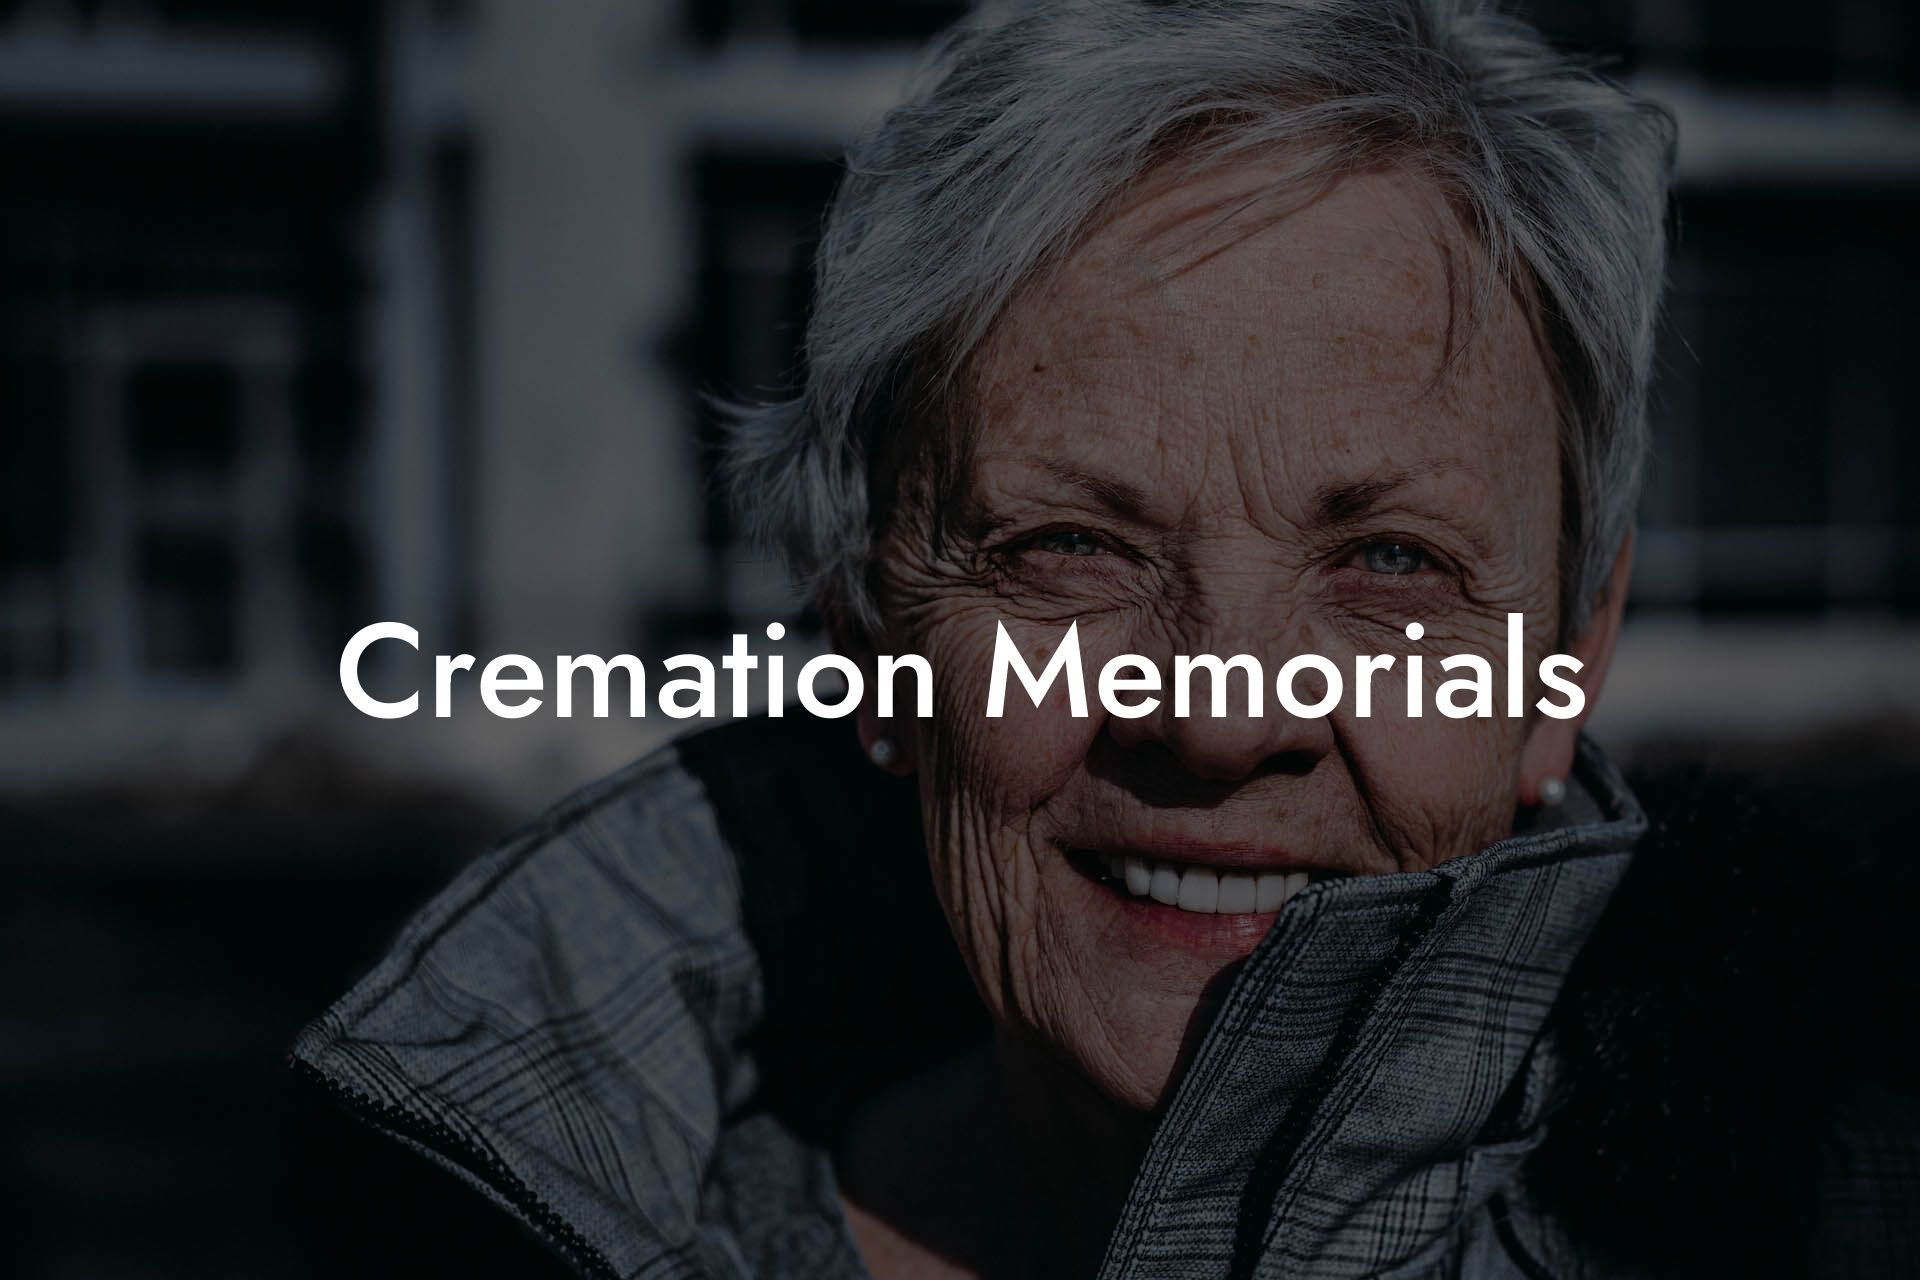 Cremation Memorials